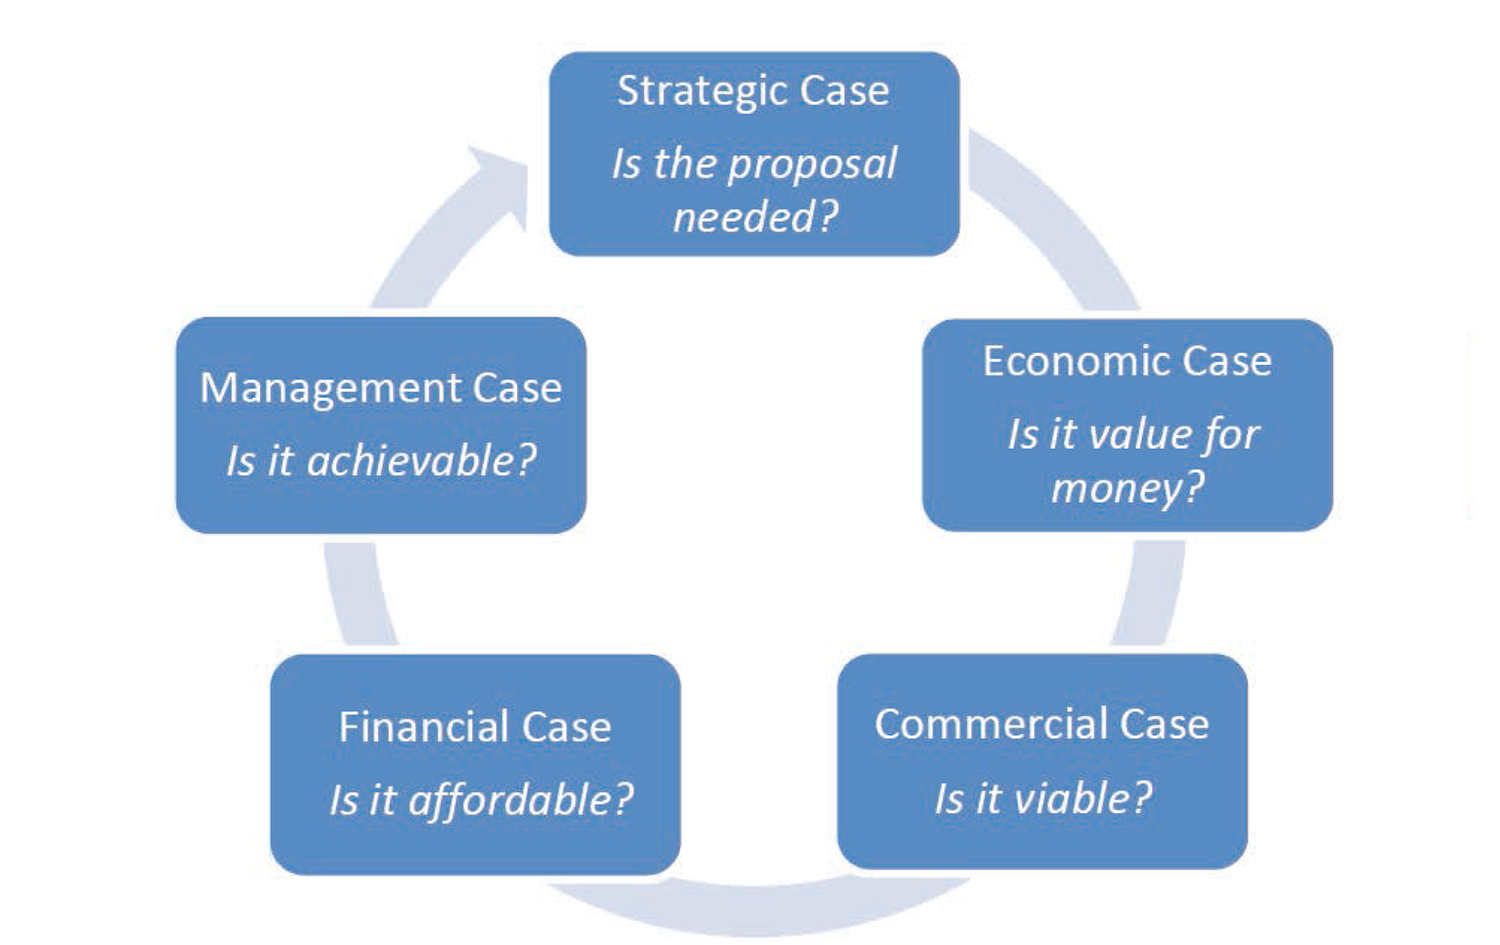 hm treasury 5 case business plan toolkit